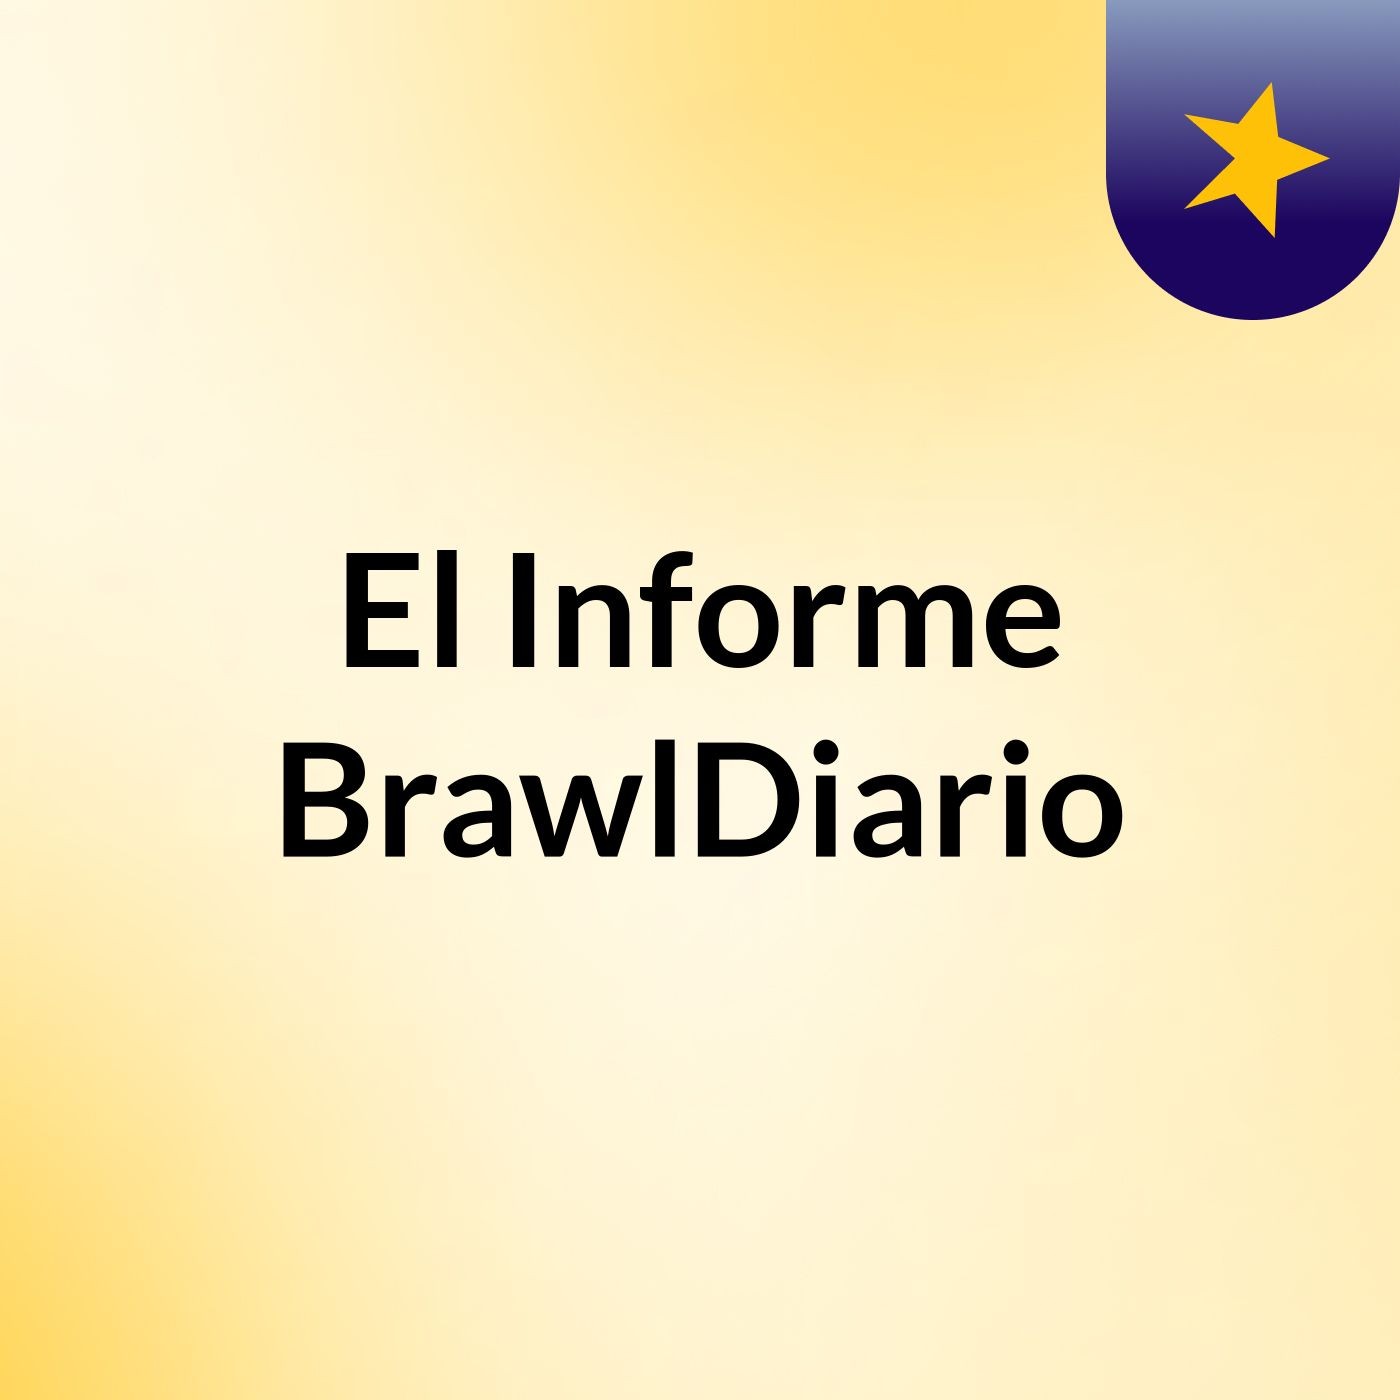 El Informe BrawlDiario